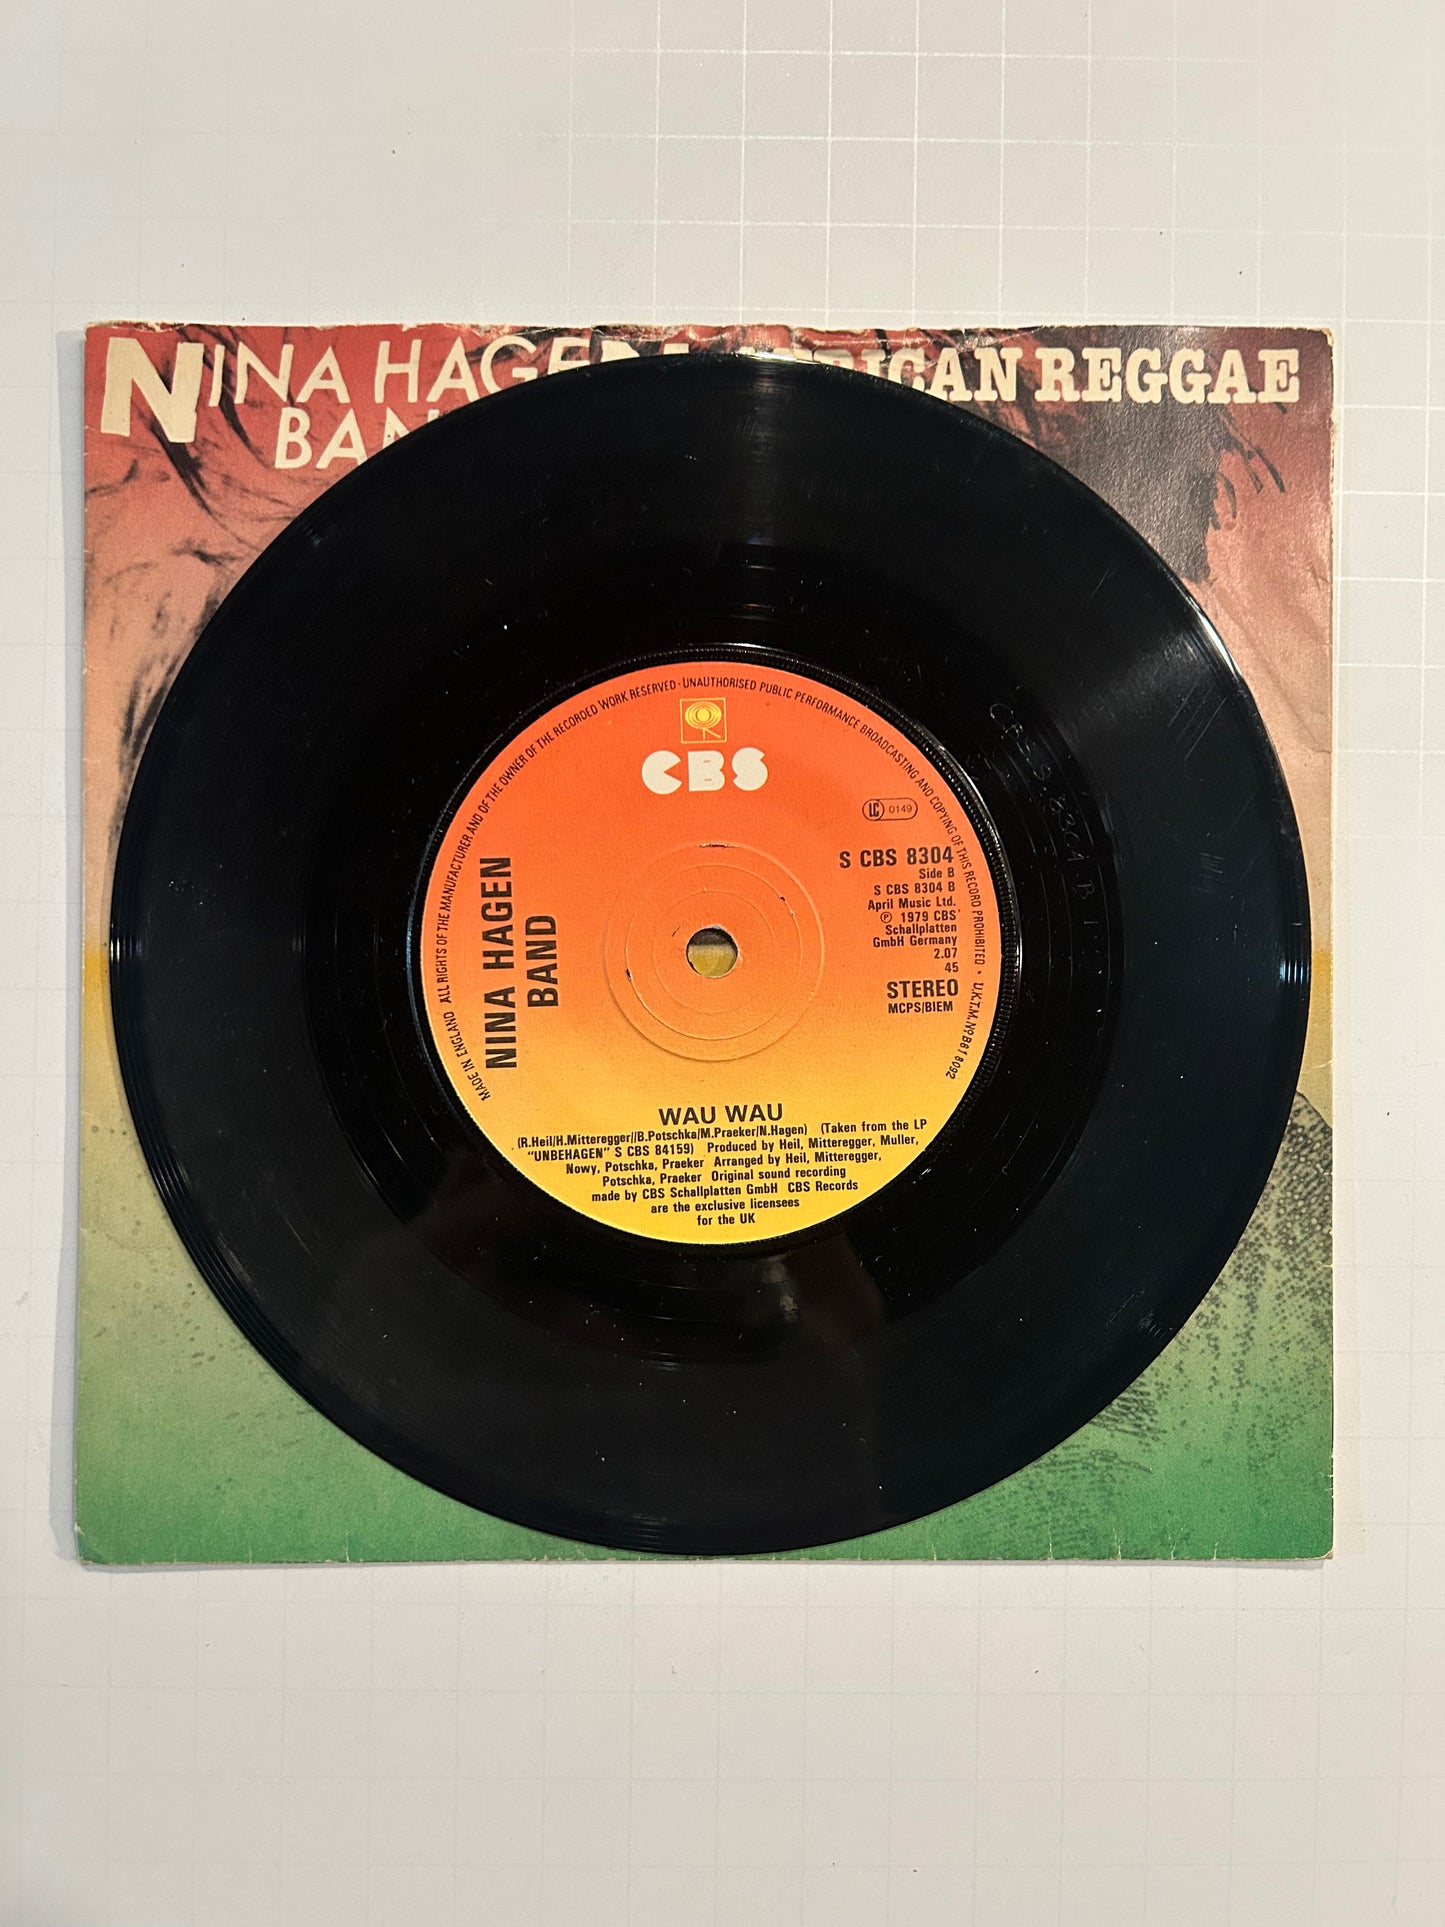 Nina Hagen Band “African Reggae / Wau-Wau” 7”